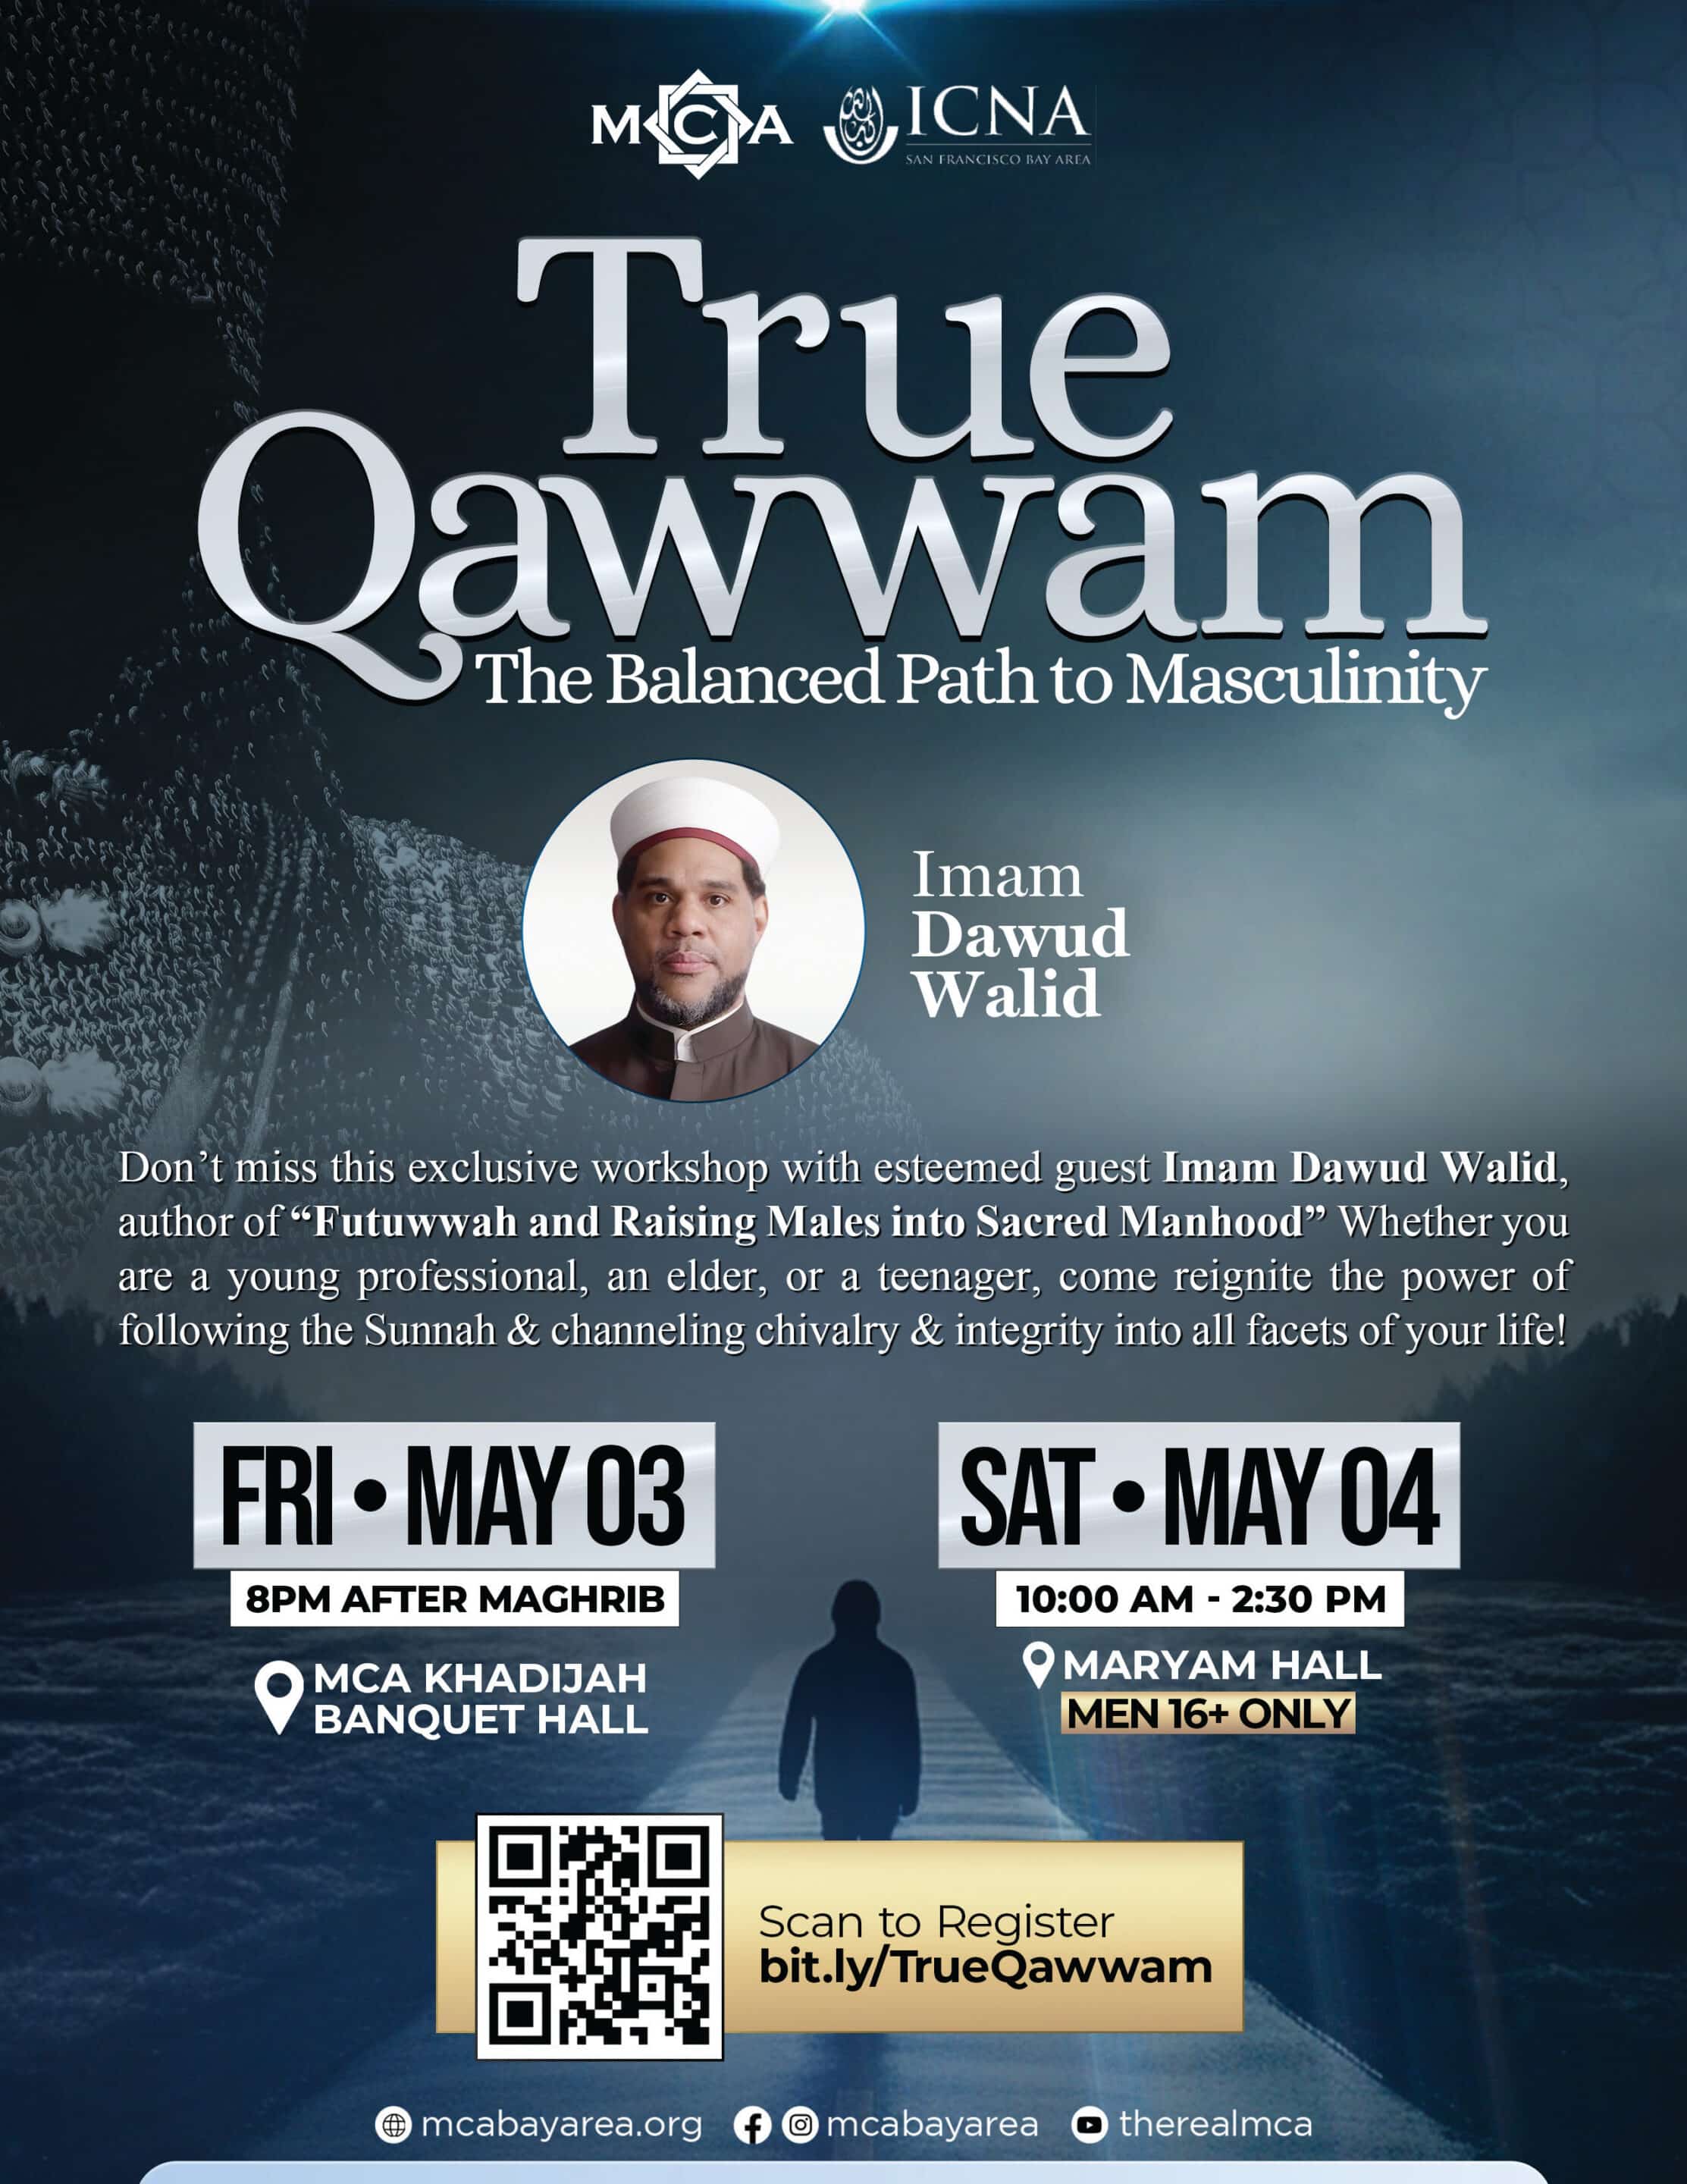 True Qawwam | The Balanced Path to Masculinity with Imam Dawud Walid